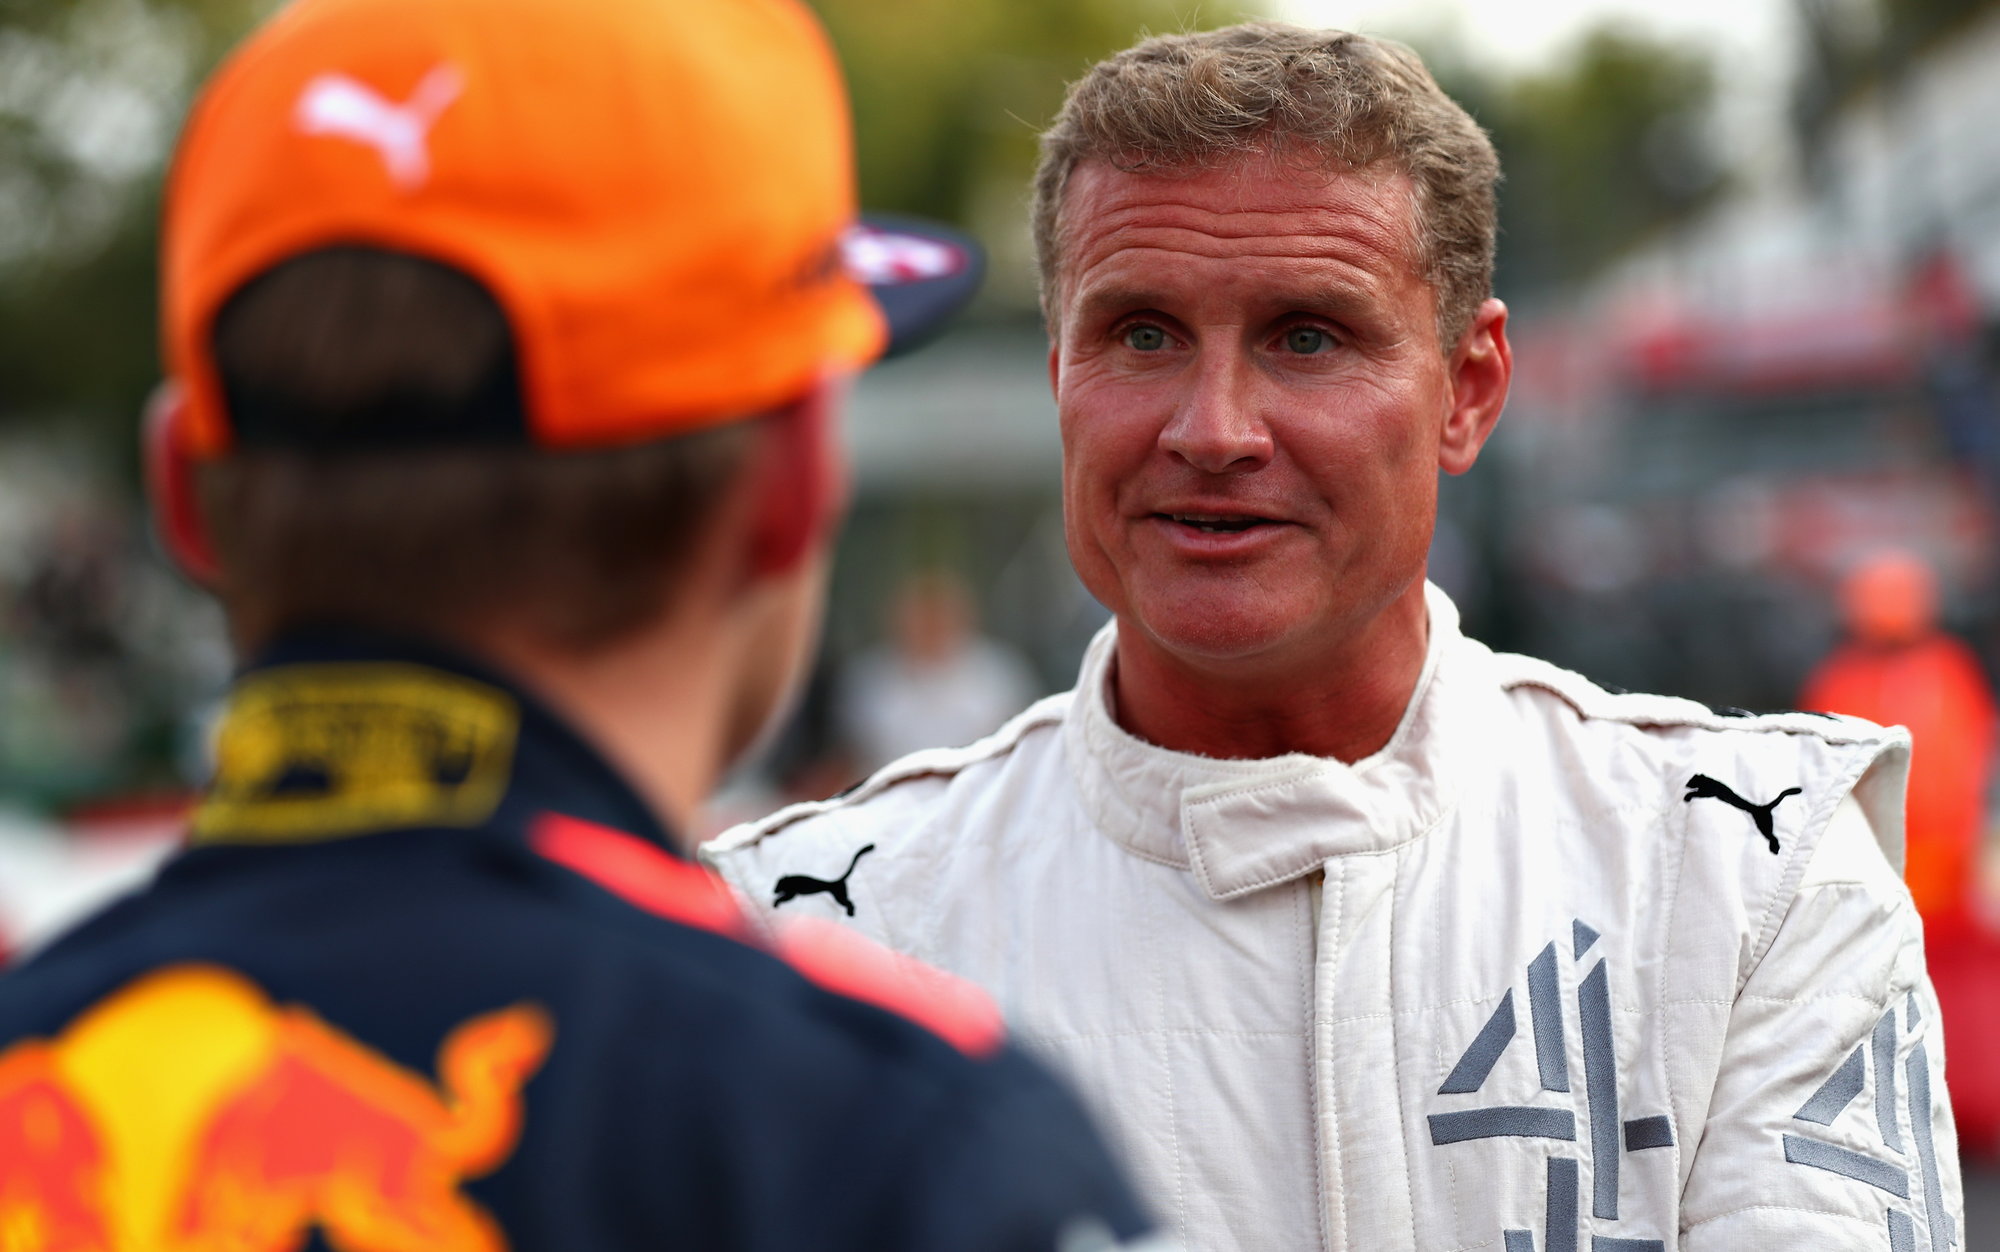 David Coulthard se vydá šířit slávu F1 do Vietnamu